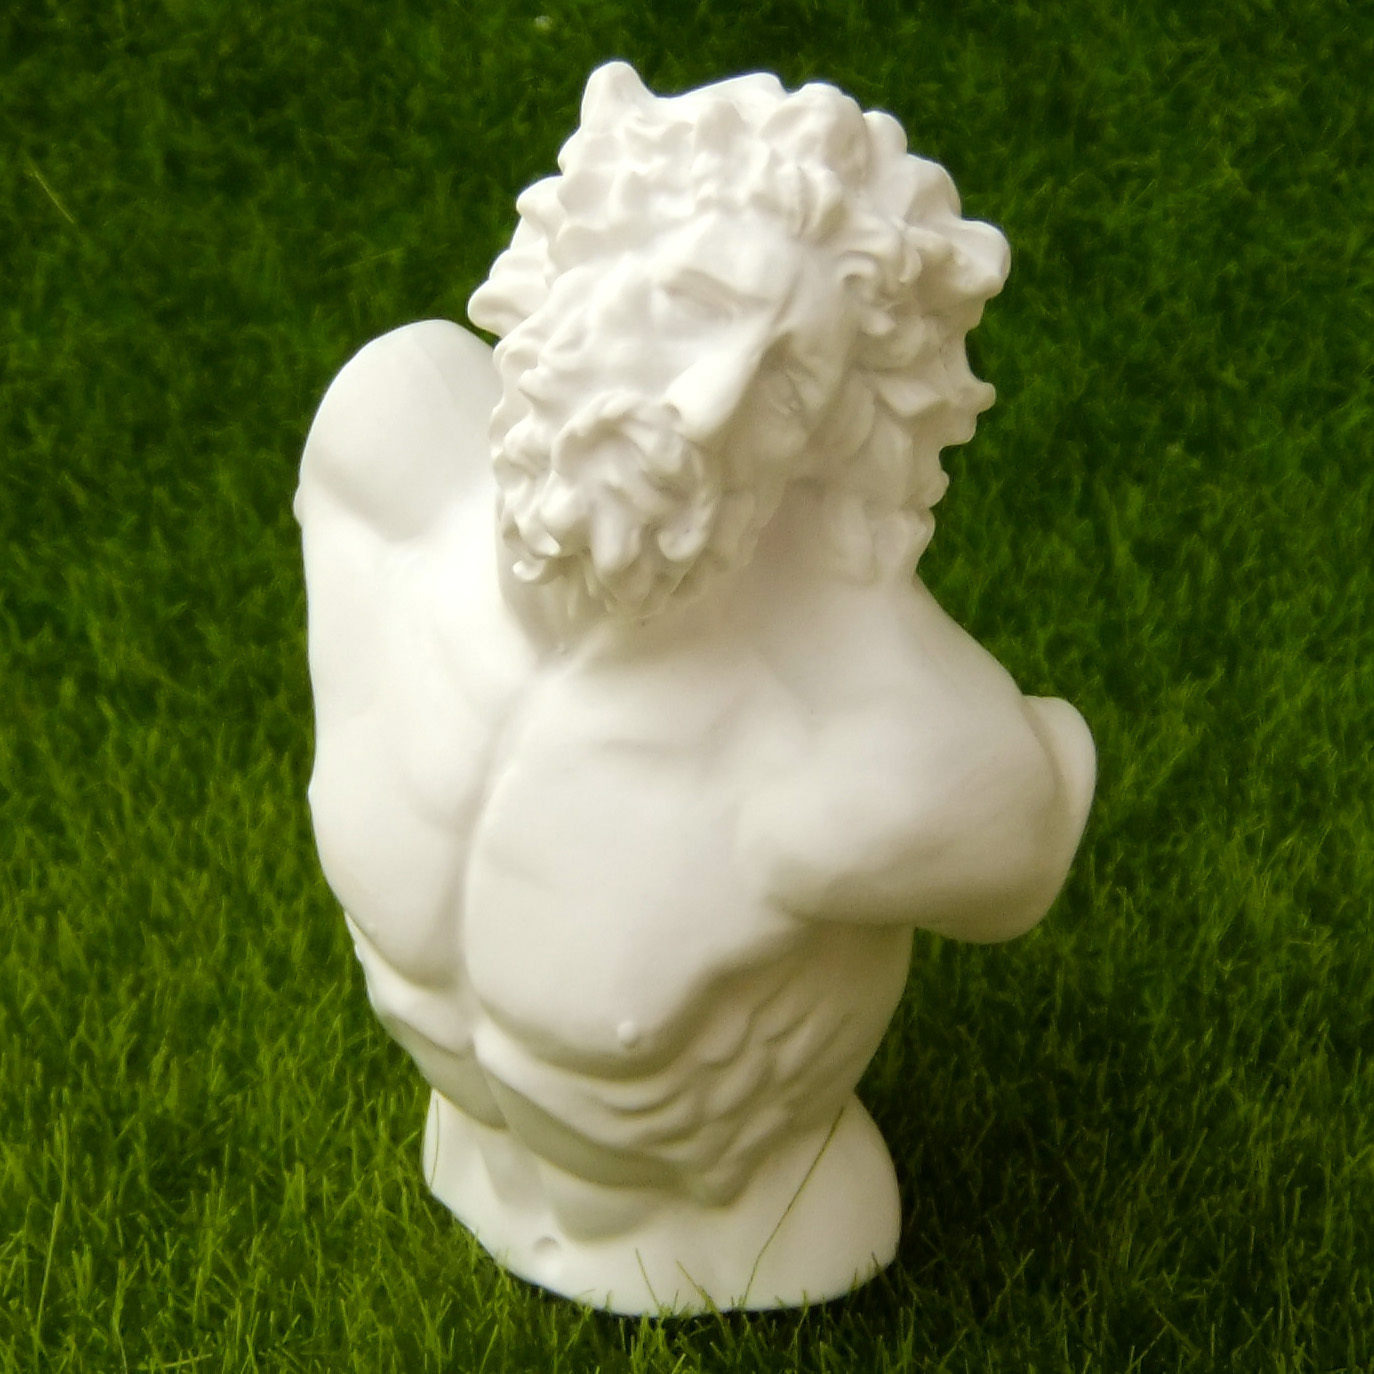 Bust of Michelangelo Daniele Sculpture Miniature Replica Reproduction Art Toy 